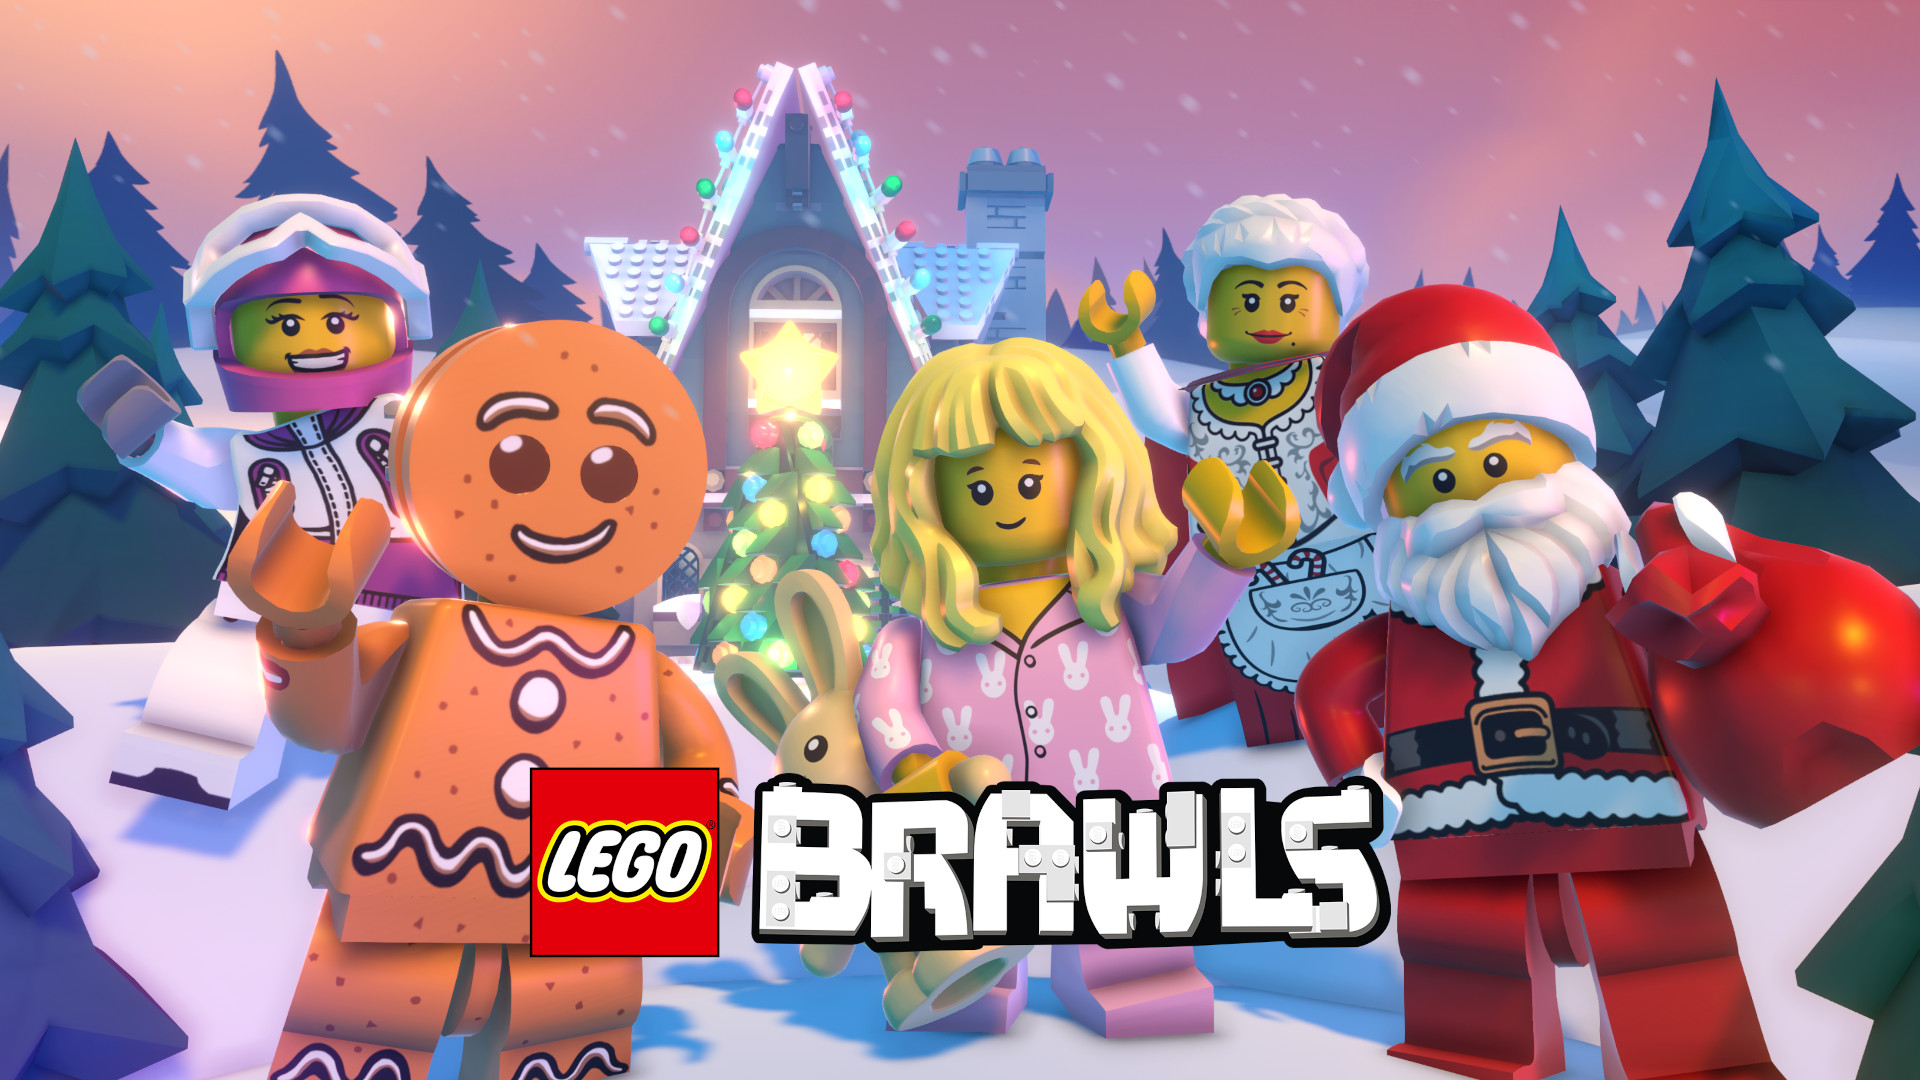 LEGO Brawls - Jingle Brawls event